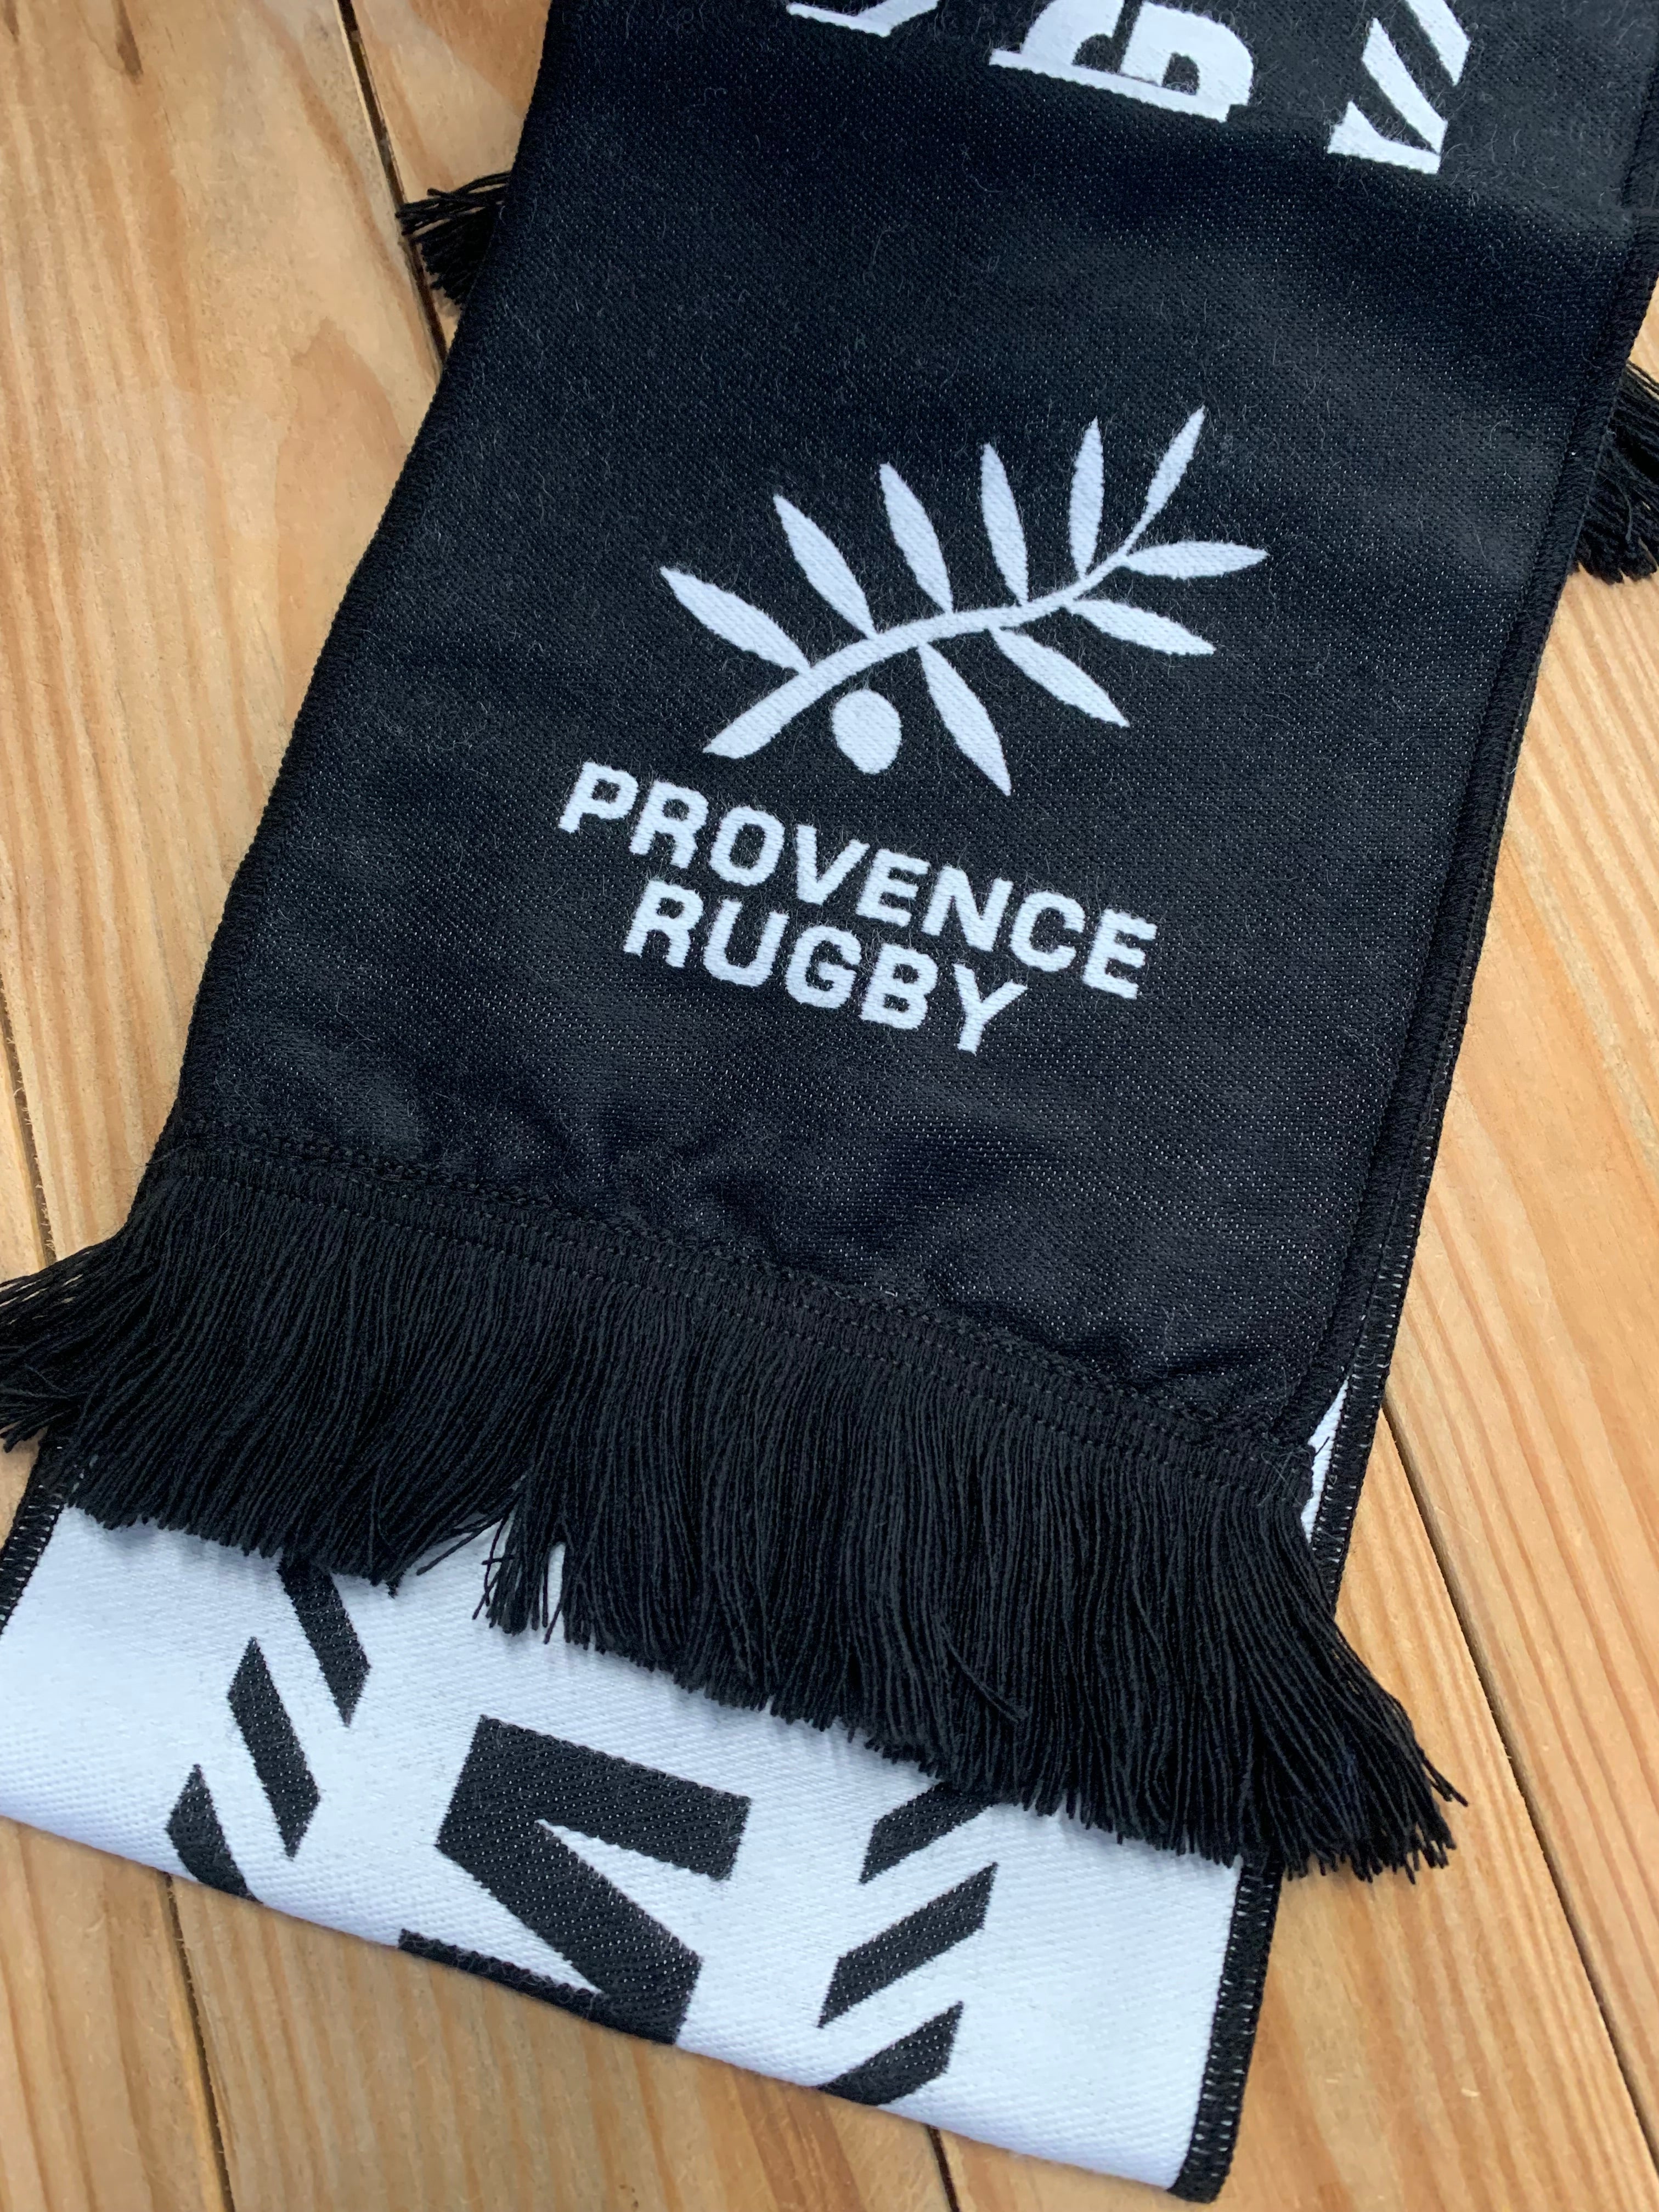 Echarpe Noire et Blanche | Provence Rugby